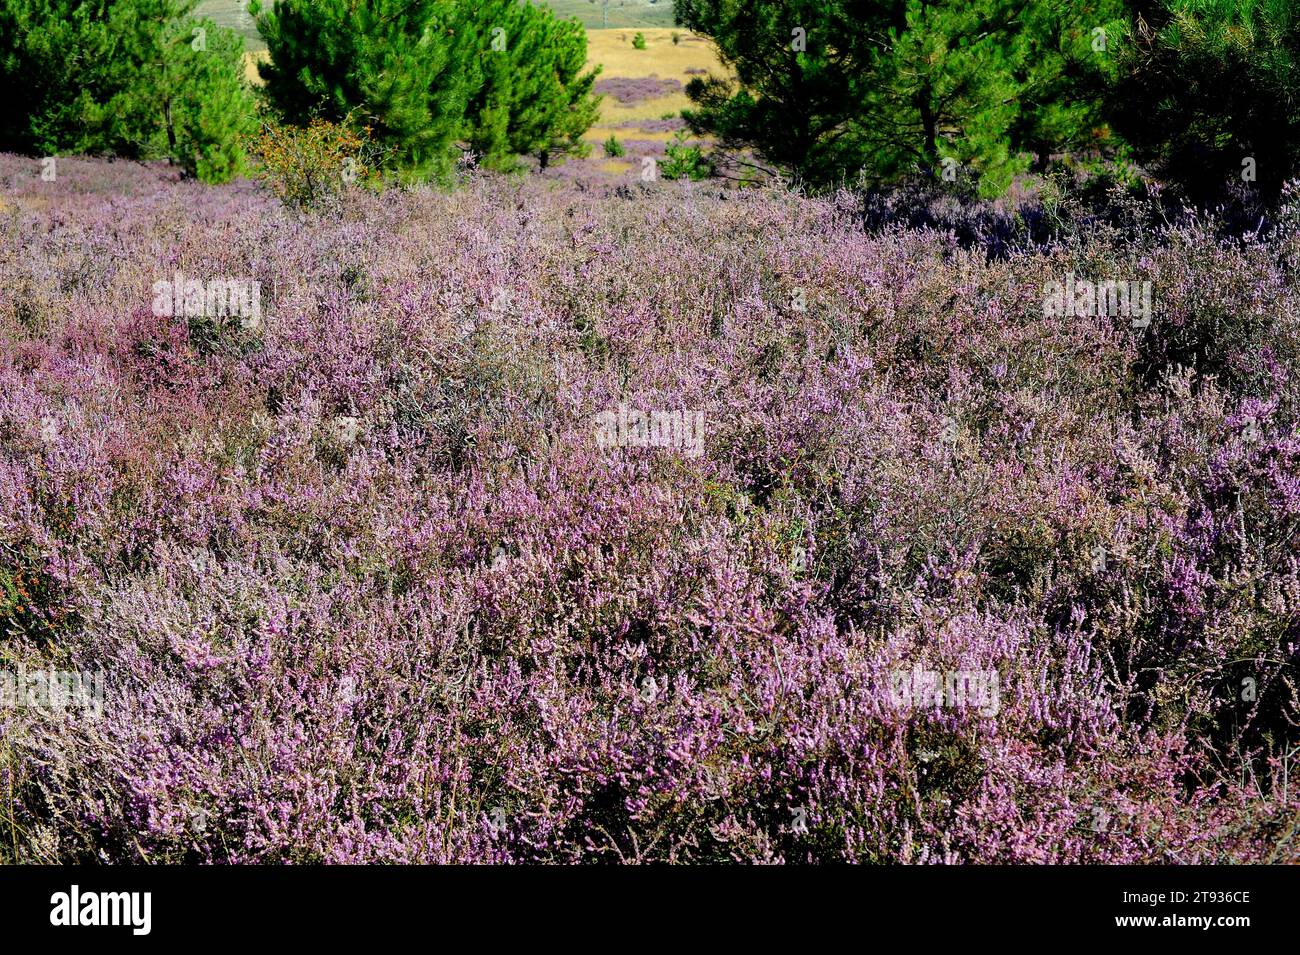 Common heather or ling (Calluna vulgaris) is a small shrub native to Europe acidic soils. This photo was taken in Soria province, Castilla y Leon, Spa Stock Photo